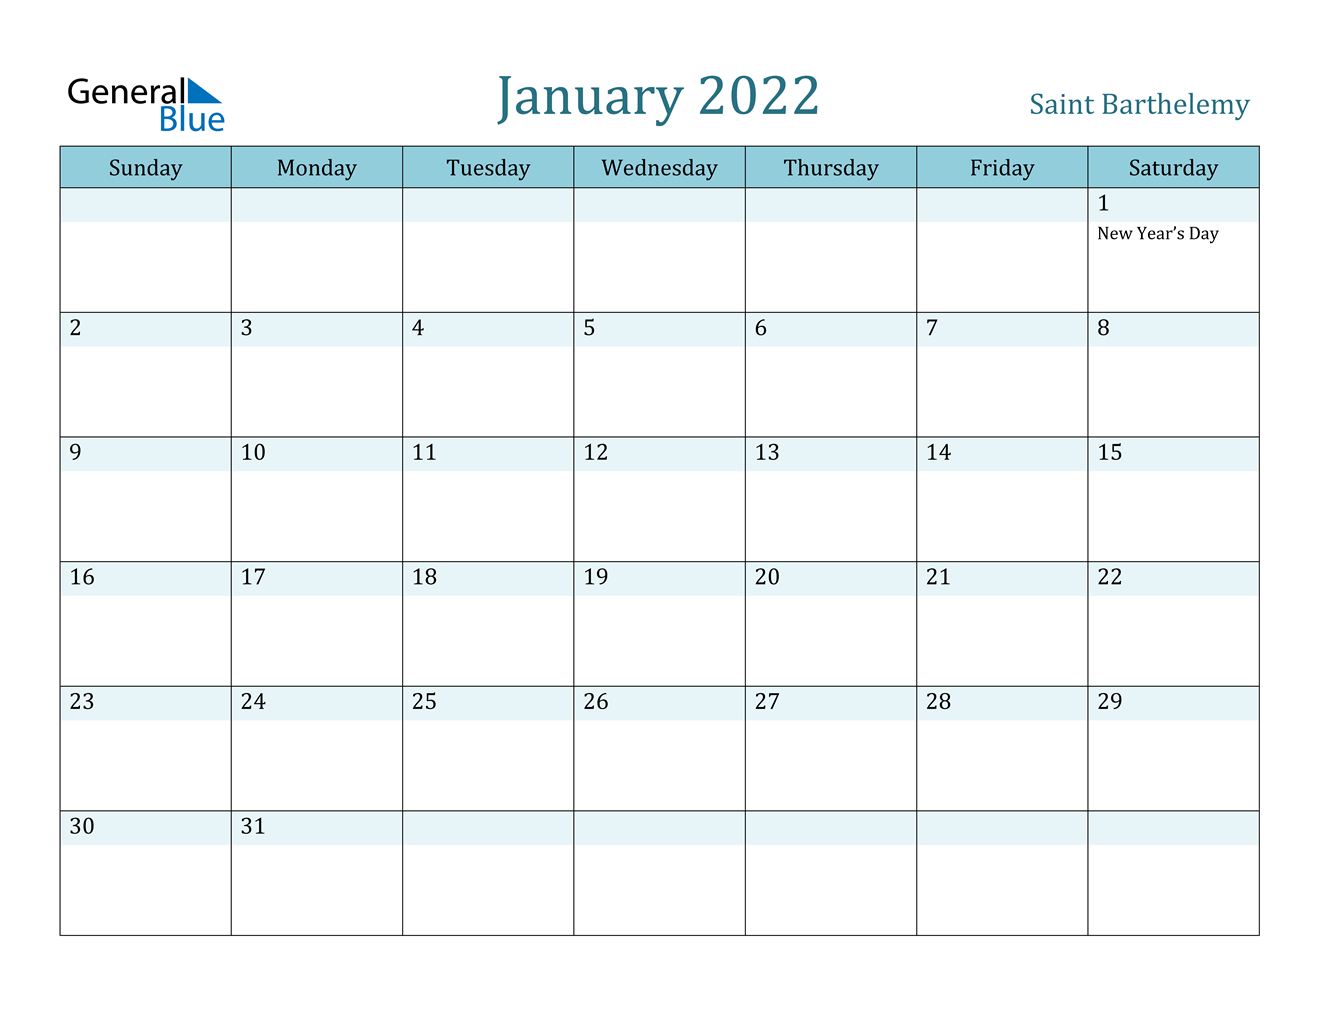 Take 2022 Calendar For January